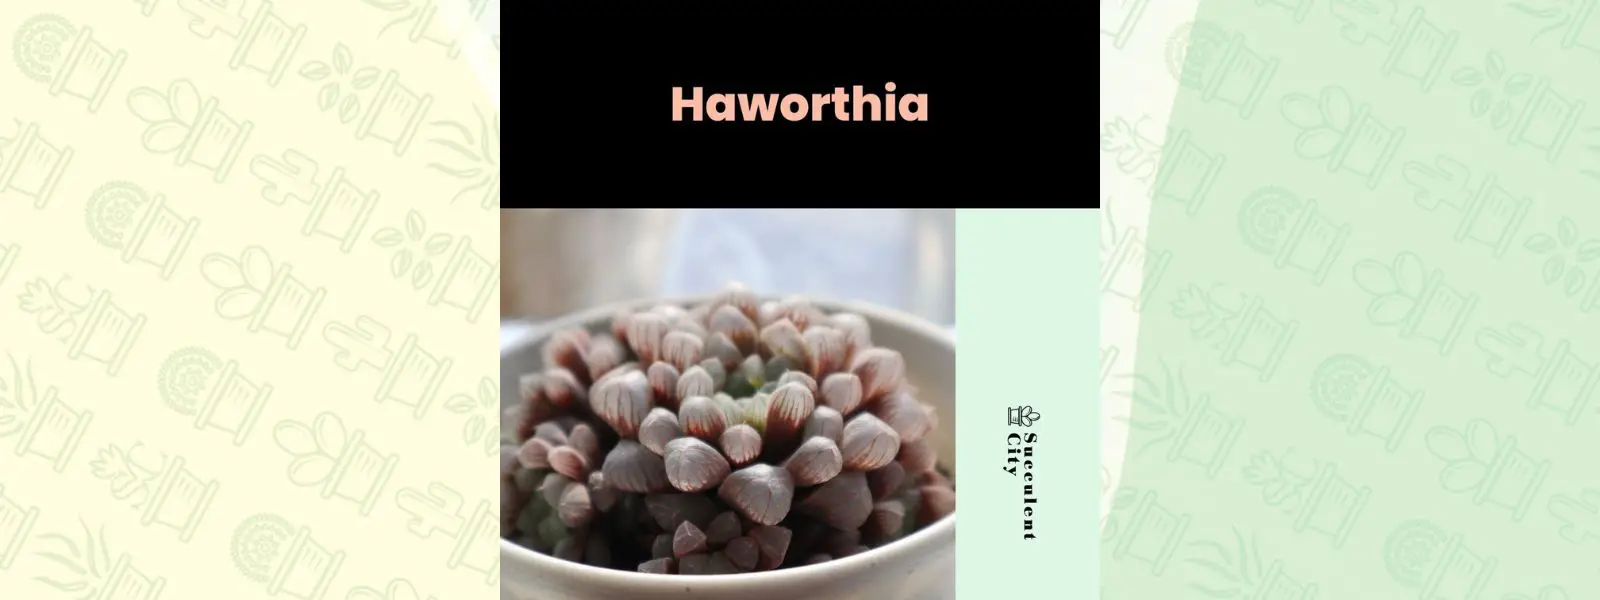 Género “Haworthia”.